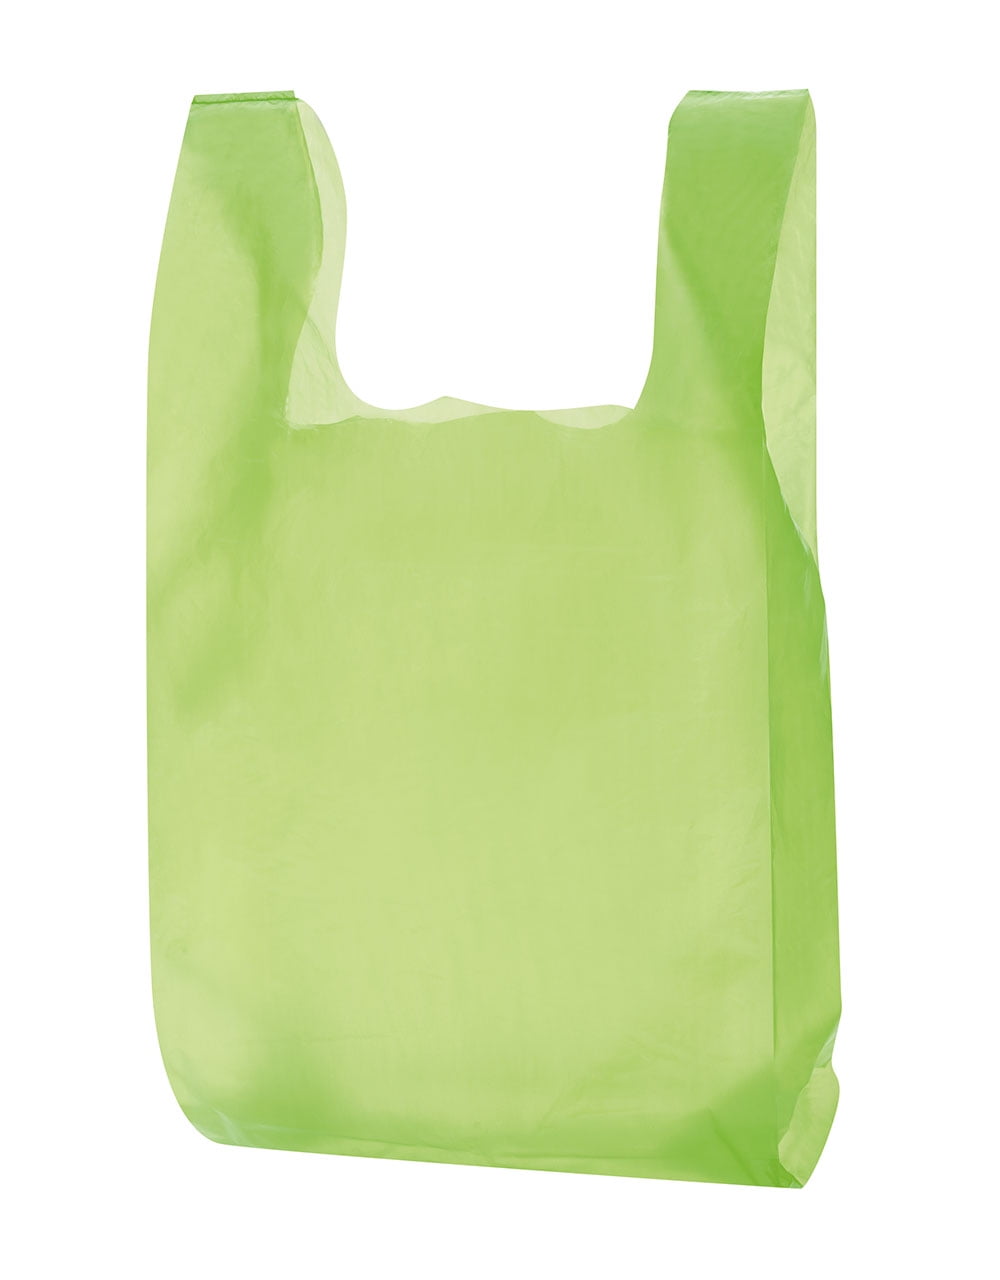 Leopard Print Design Plastic T-Shirt Retail Shopping Bags Handles 11.5" x6" x21" 